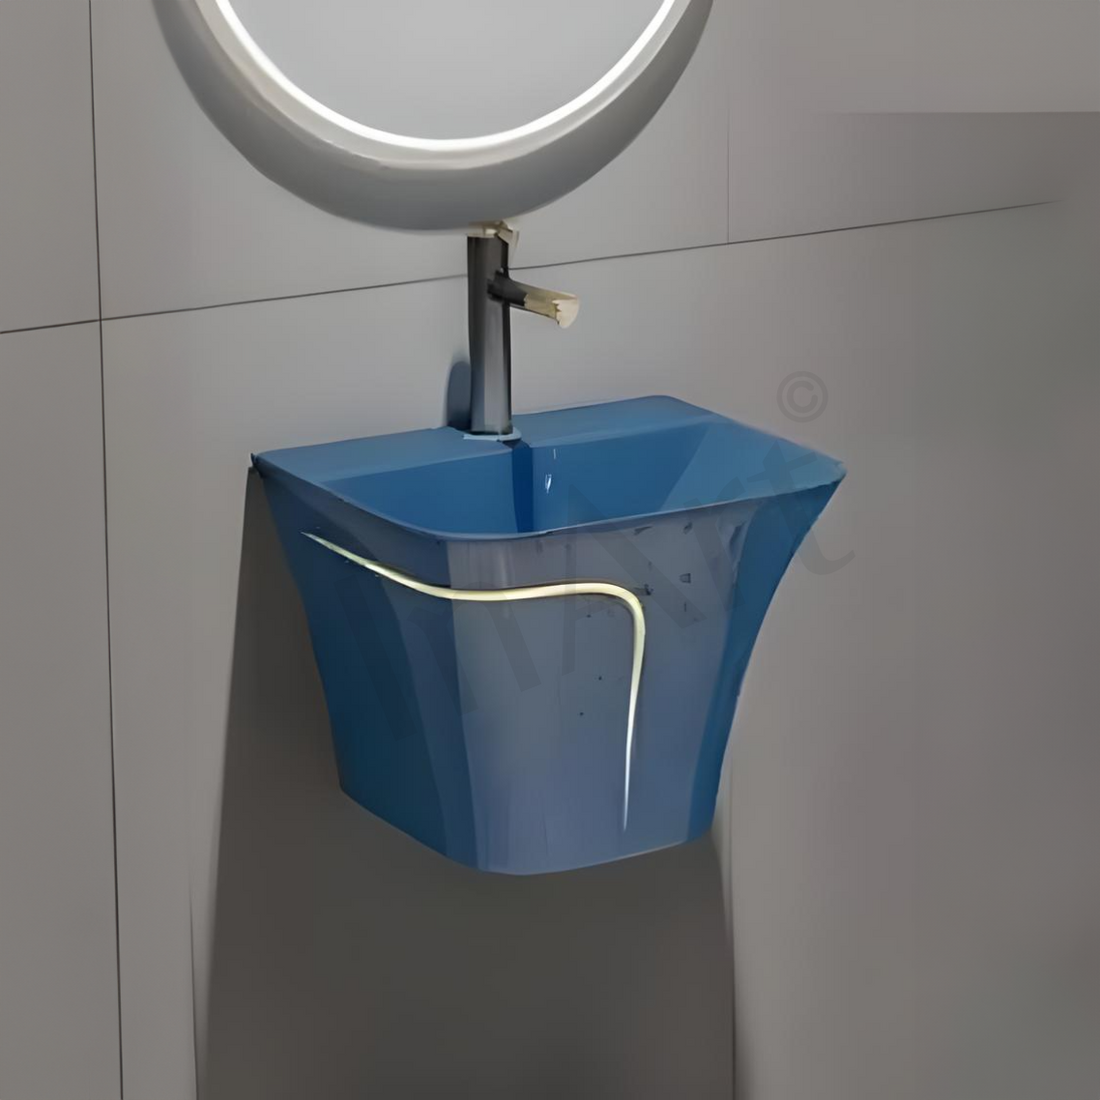 InArt Premium Ceramic Wall-Hung Wash Basin - 20x18" Half Pedestal, Blue Glossy Finish - InArt-Studio